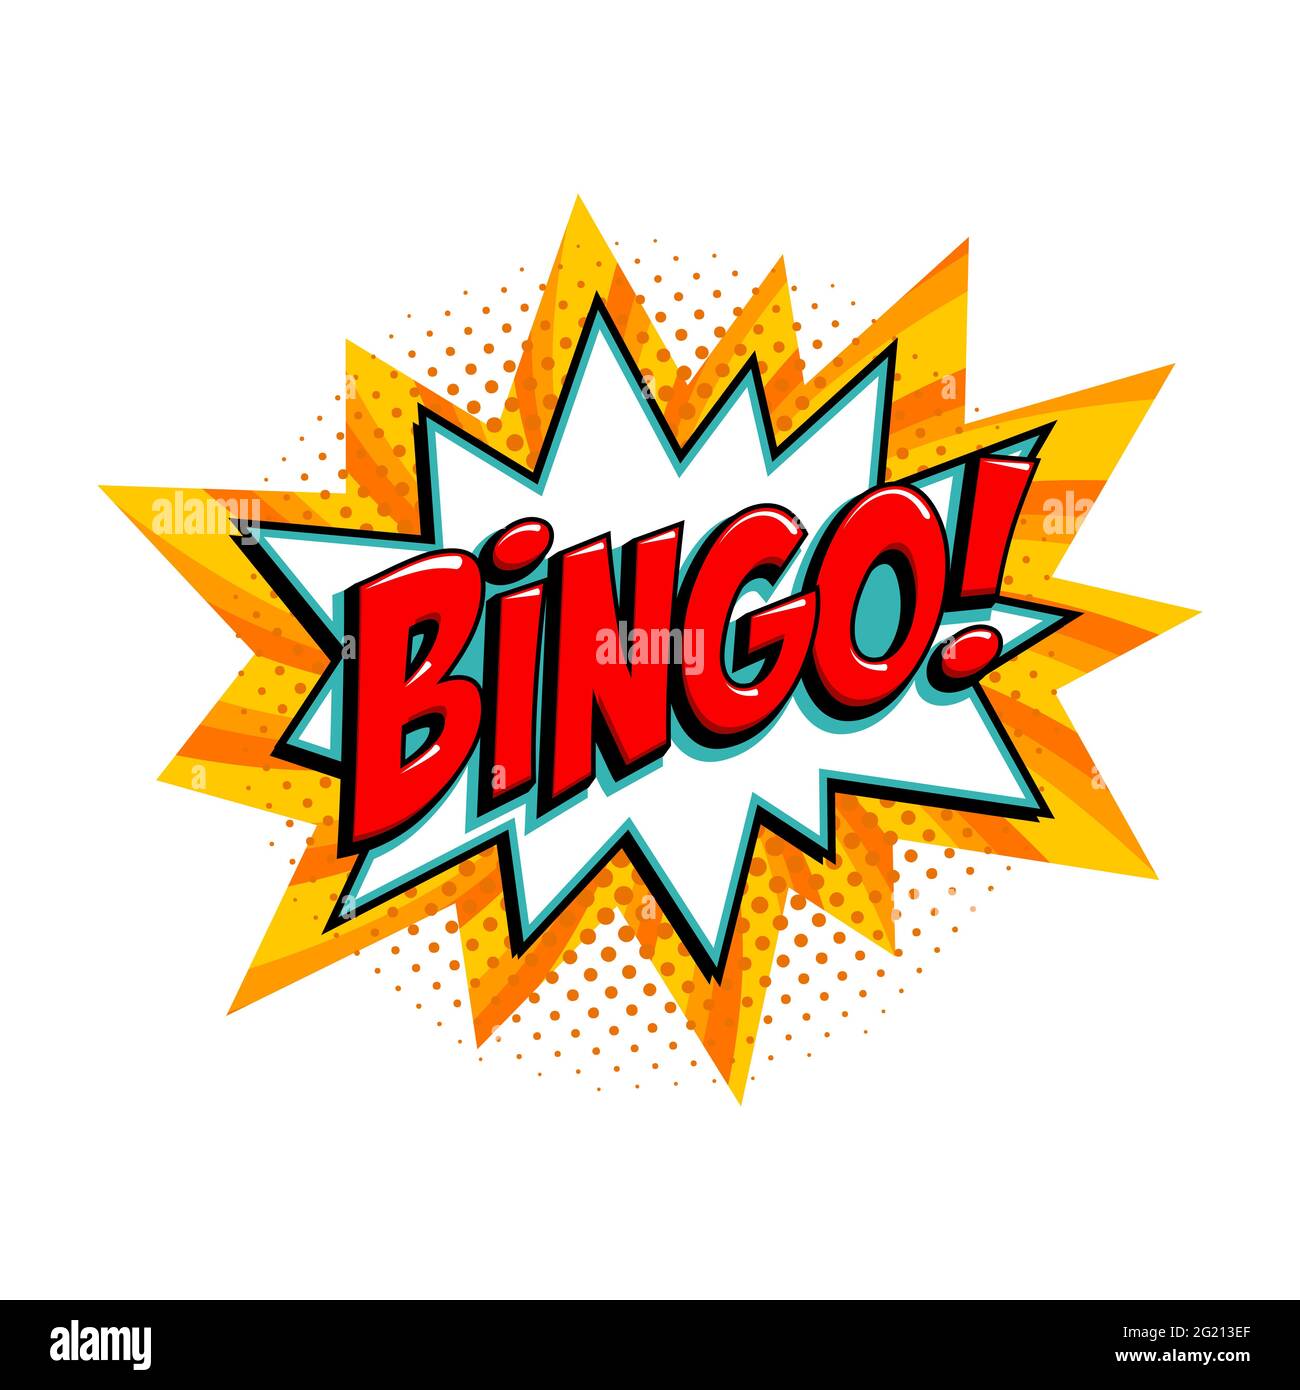 Bingo - Lotterie gelben Vektor-Banner. Lotterie-Spiel Hintergrund in Comic Pop-Art-Stil. Cartoon Vektorgrafik. Stock Vektor